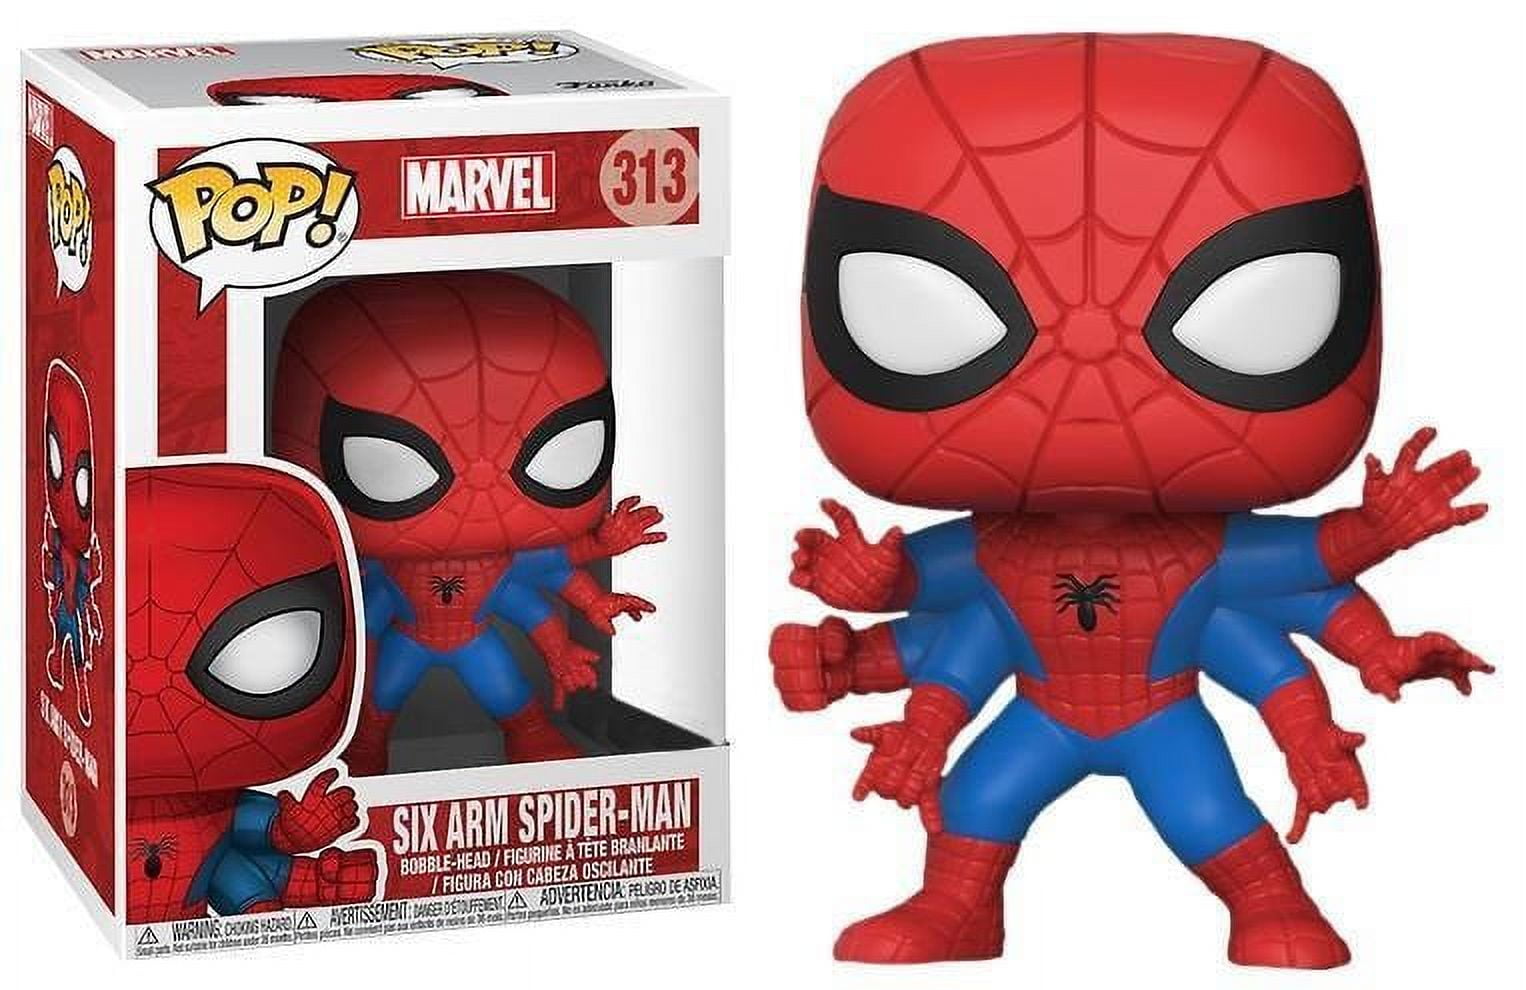 Funko POP! Marvel Six Arm Spider-Man Vinyl Bobble Head 